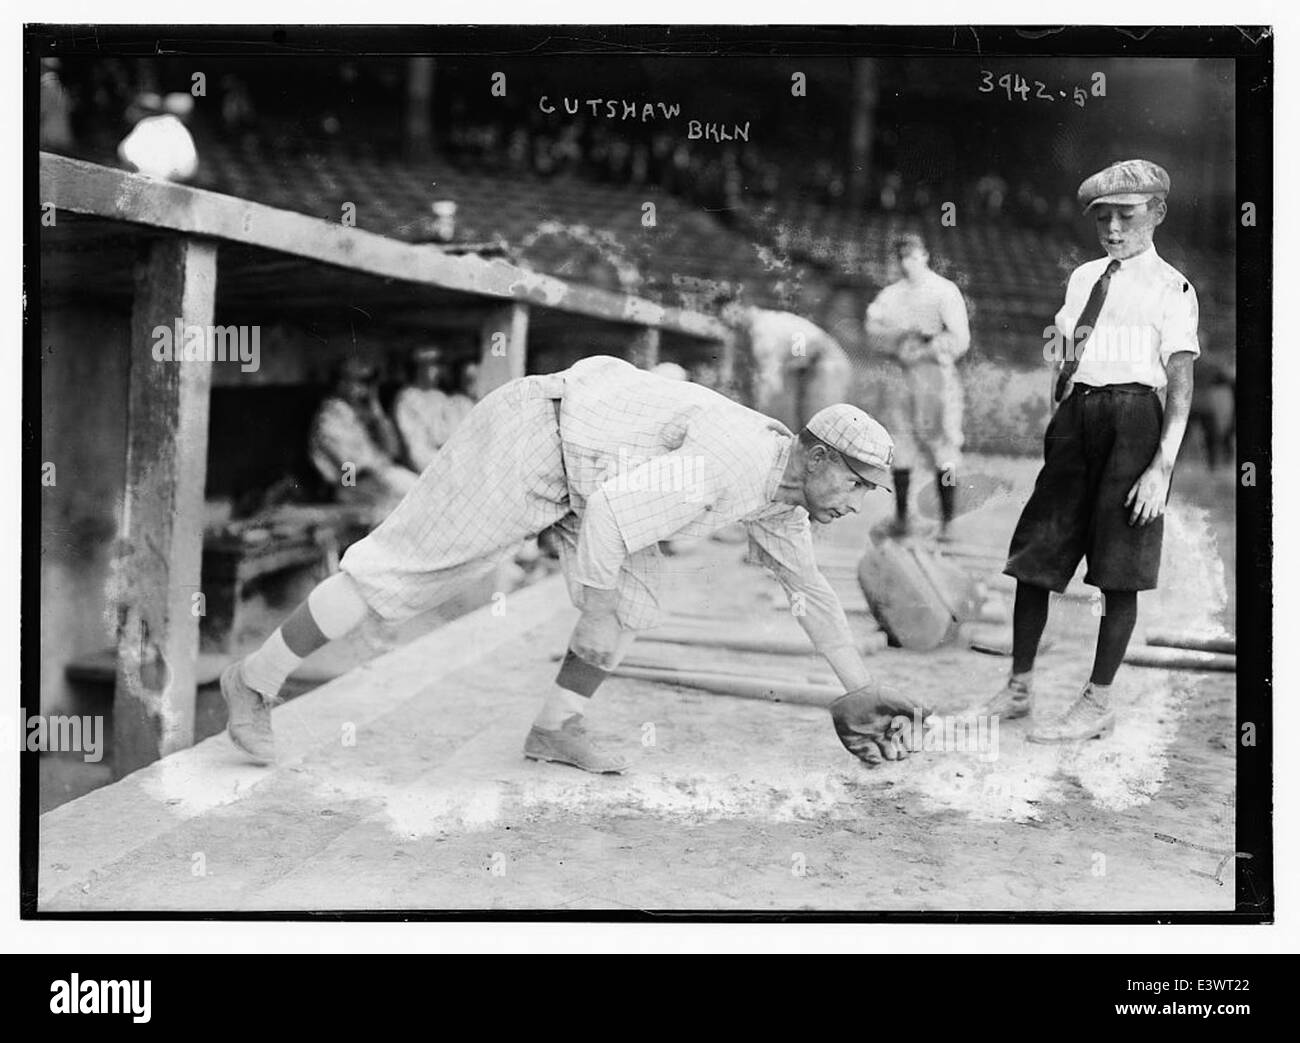 [George Cutshaw, Brooklyn NL (baseball)] (LOC) Stock Photo